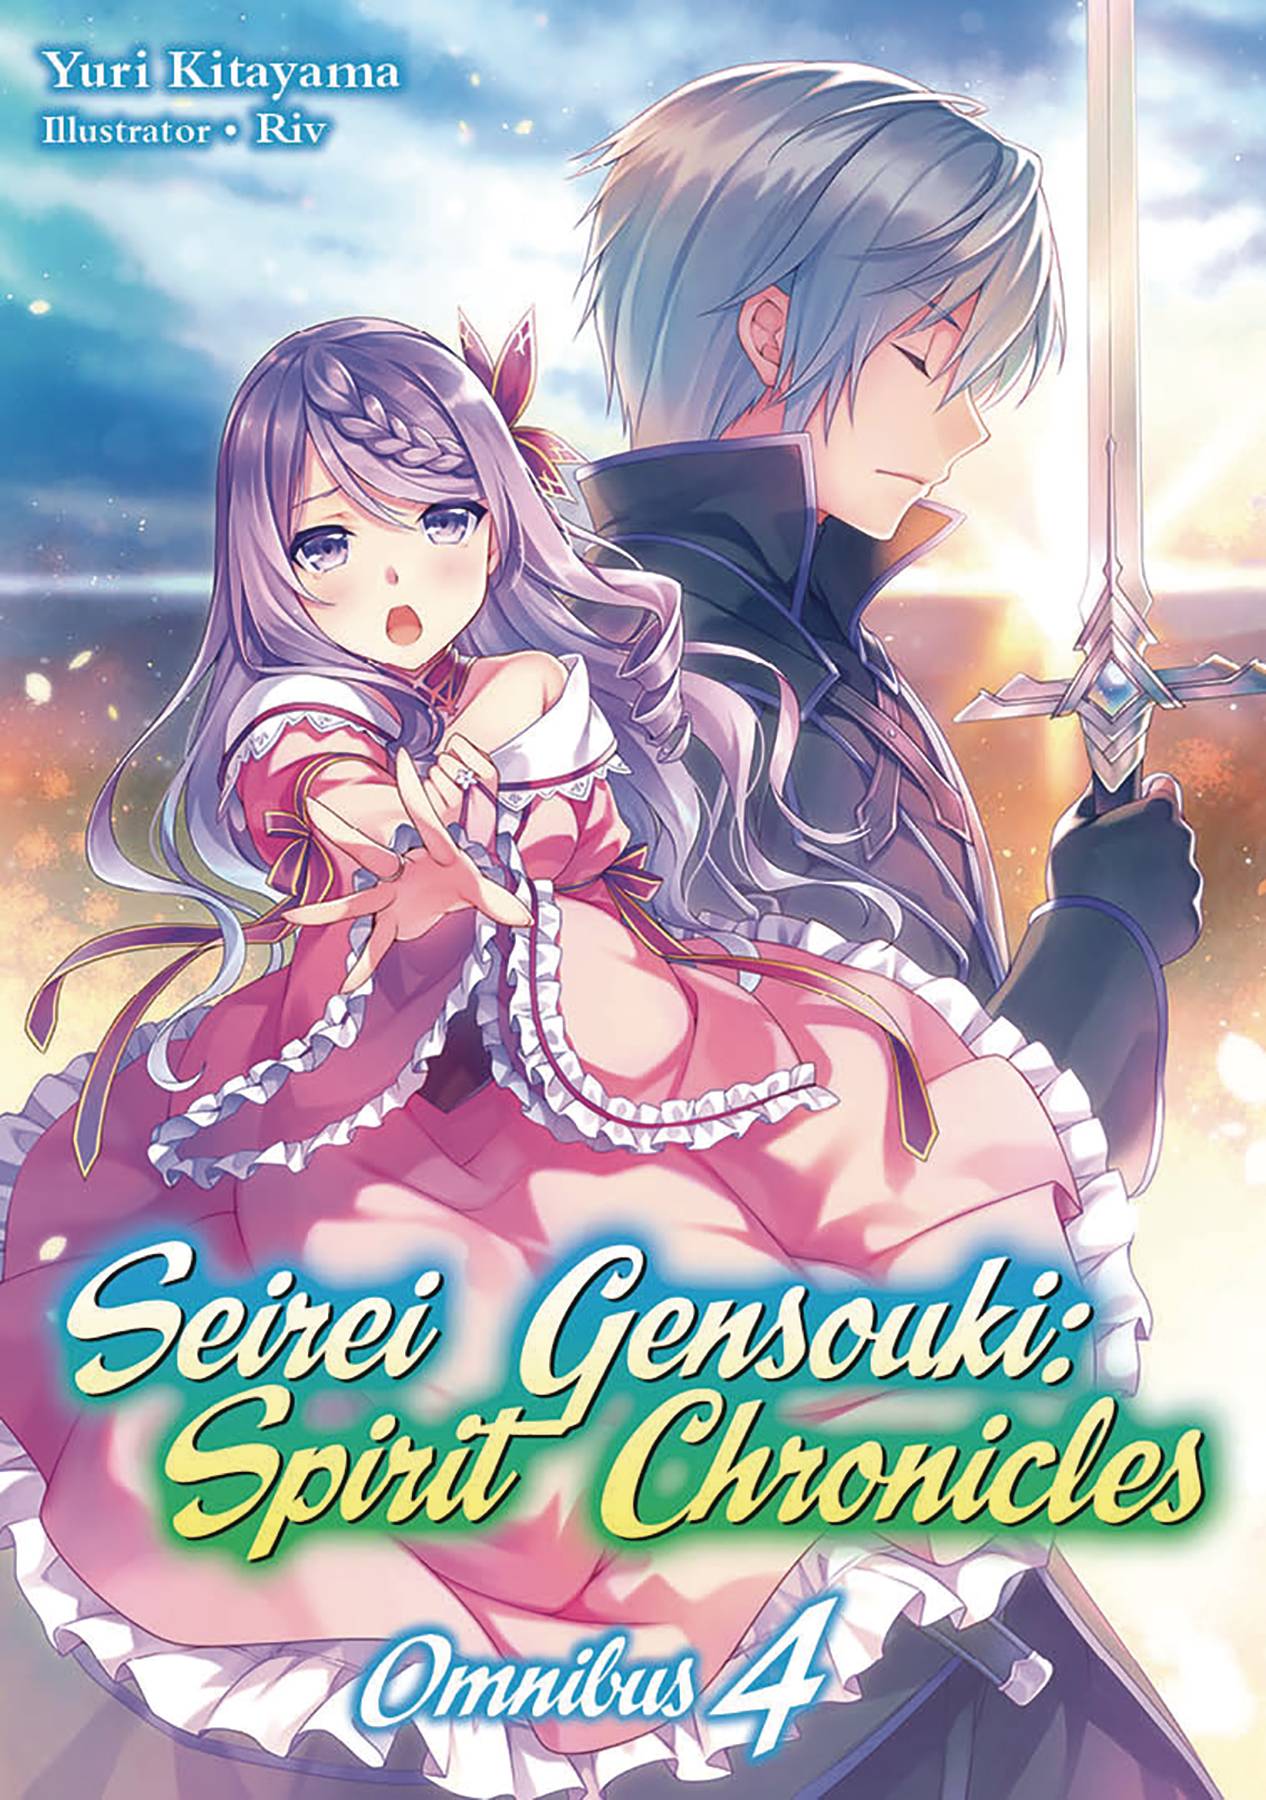 Seirei Gensouki - Spirit Chronicles Novels Get TV Anime - News